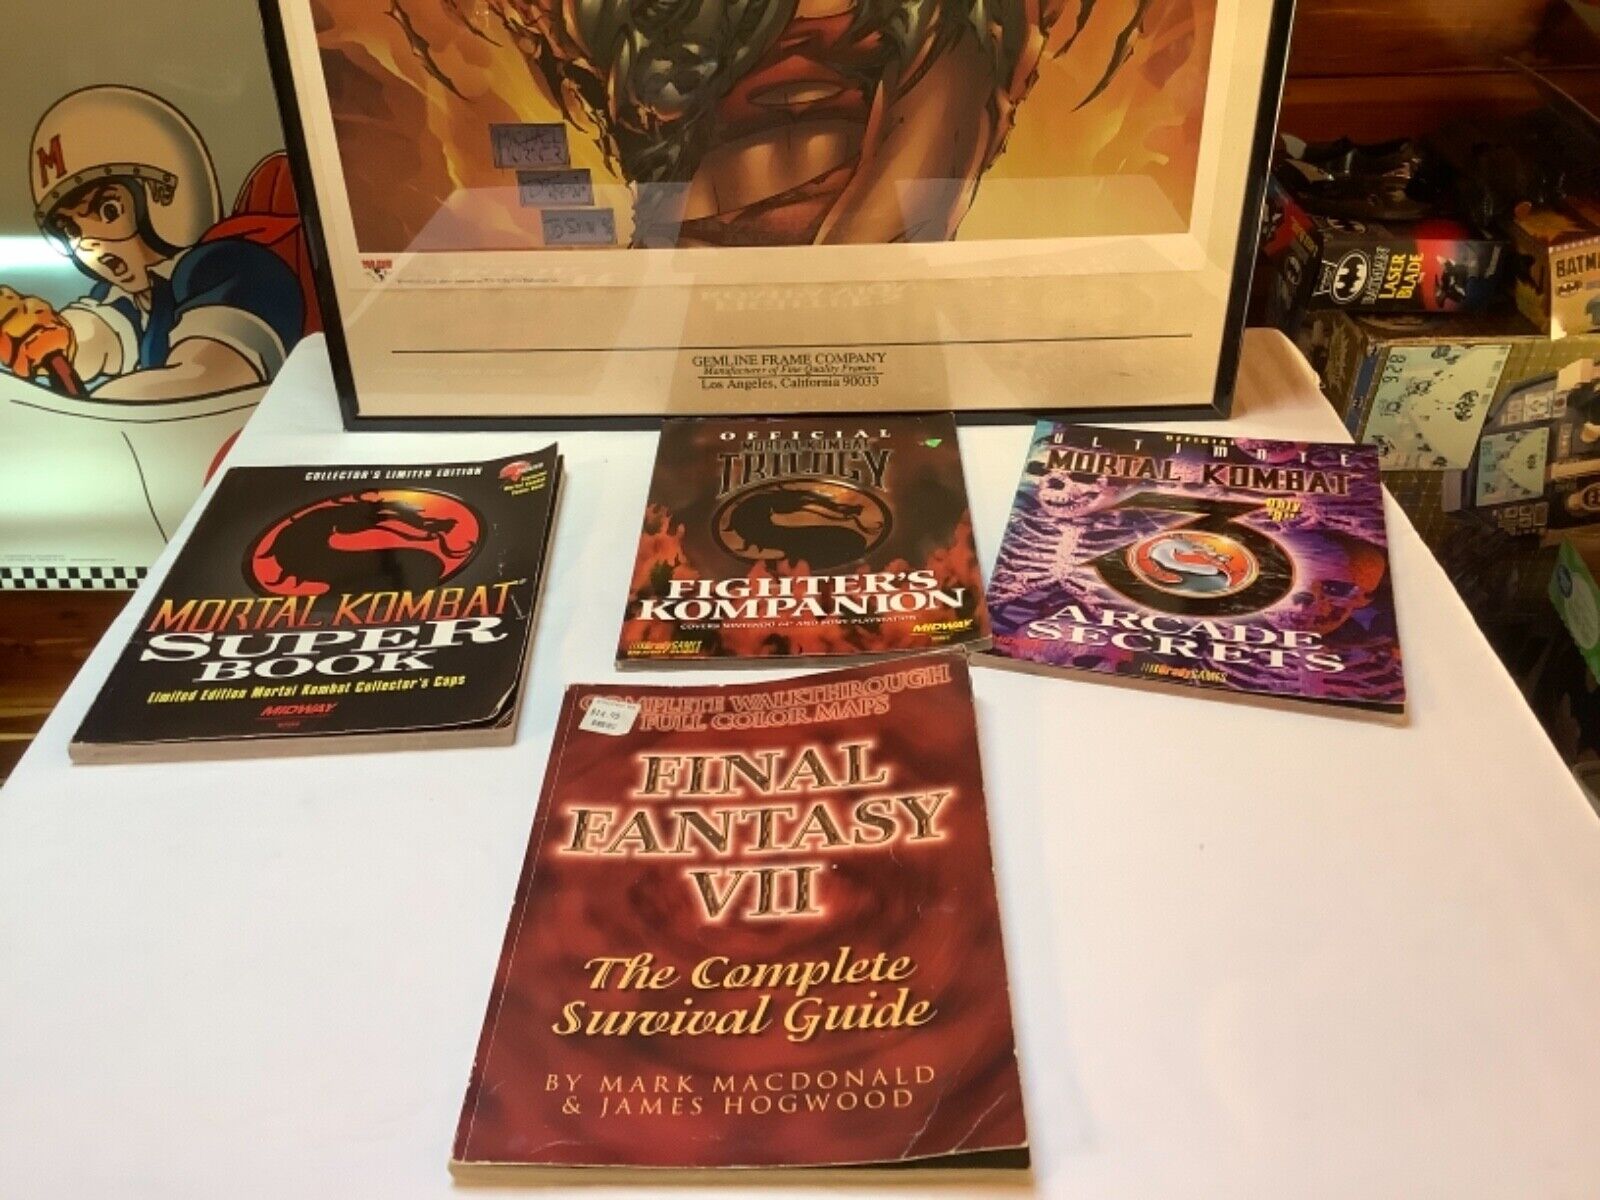 Vintage Mortal Kombat Super Book1994, Mortal Kombat Fighters Kompanion 1996, Mor Midway